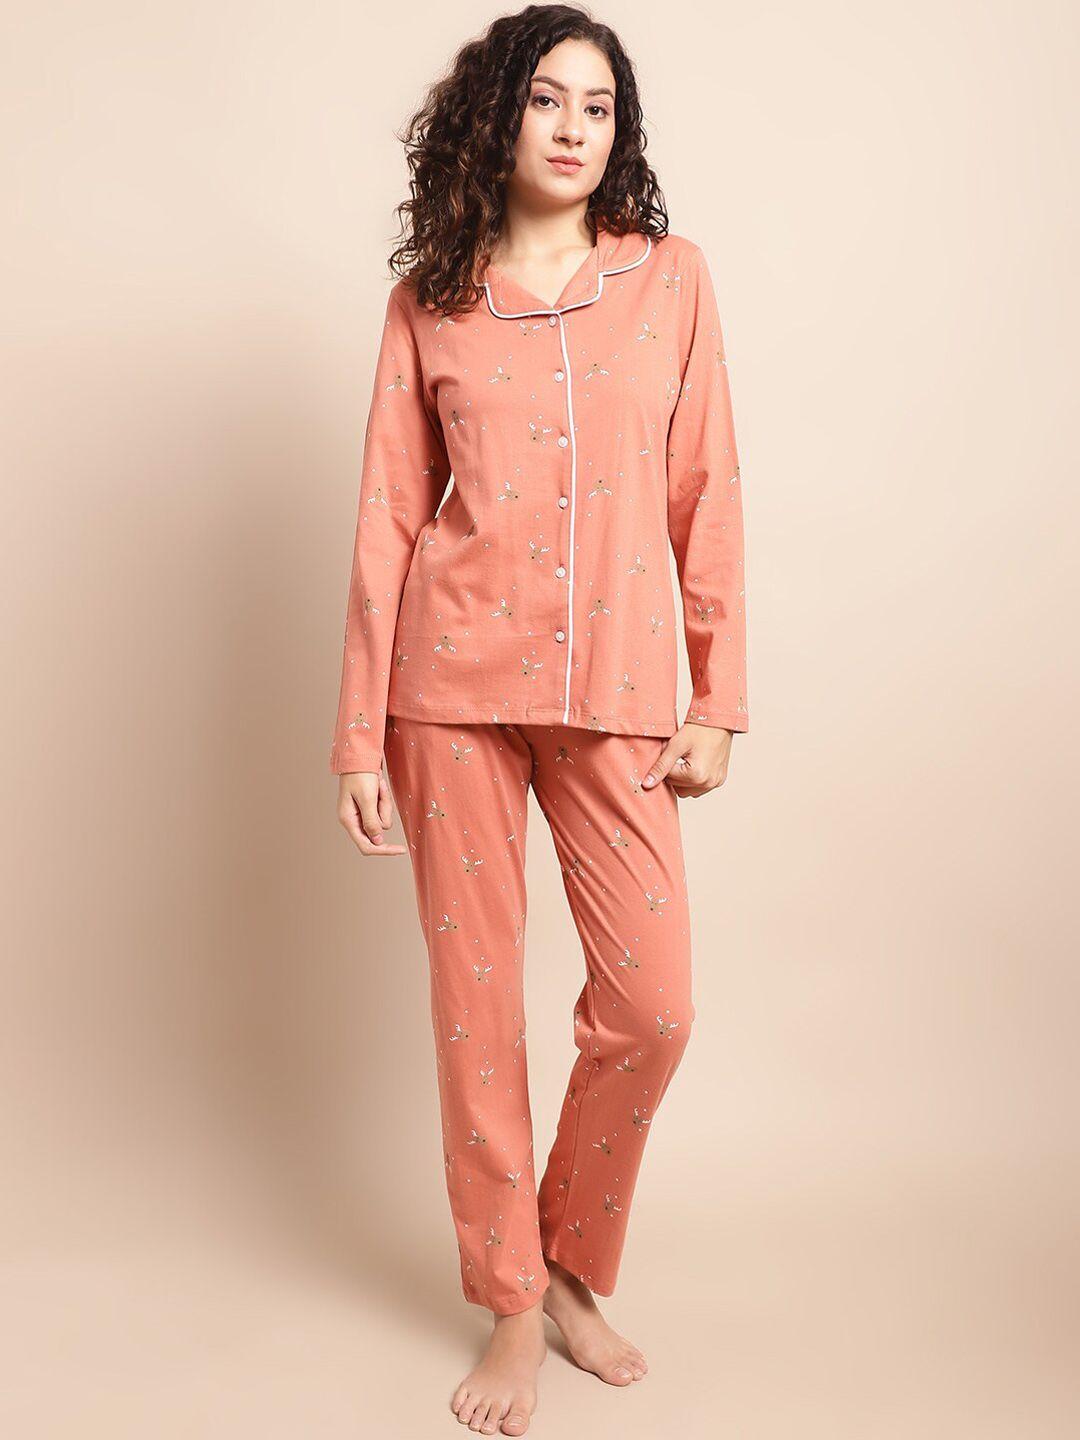 kanvin peach & white conversational printed pure cotton night suit